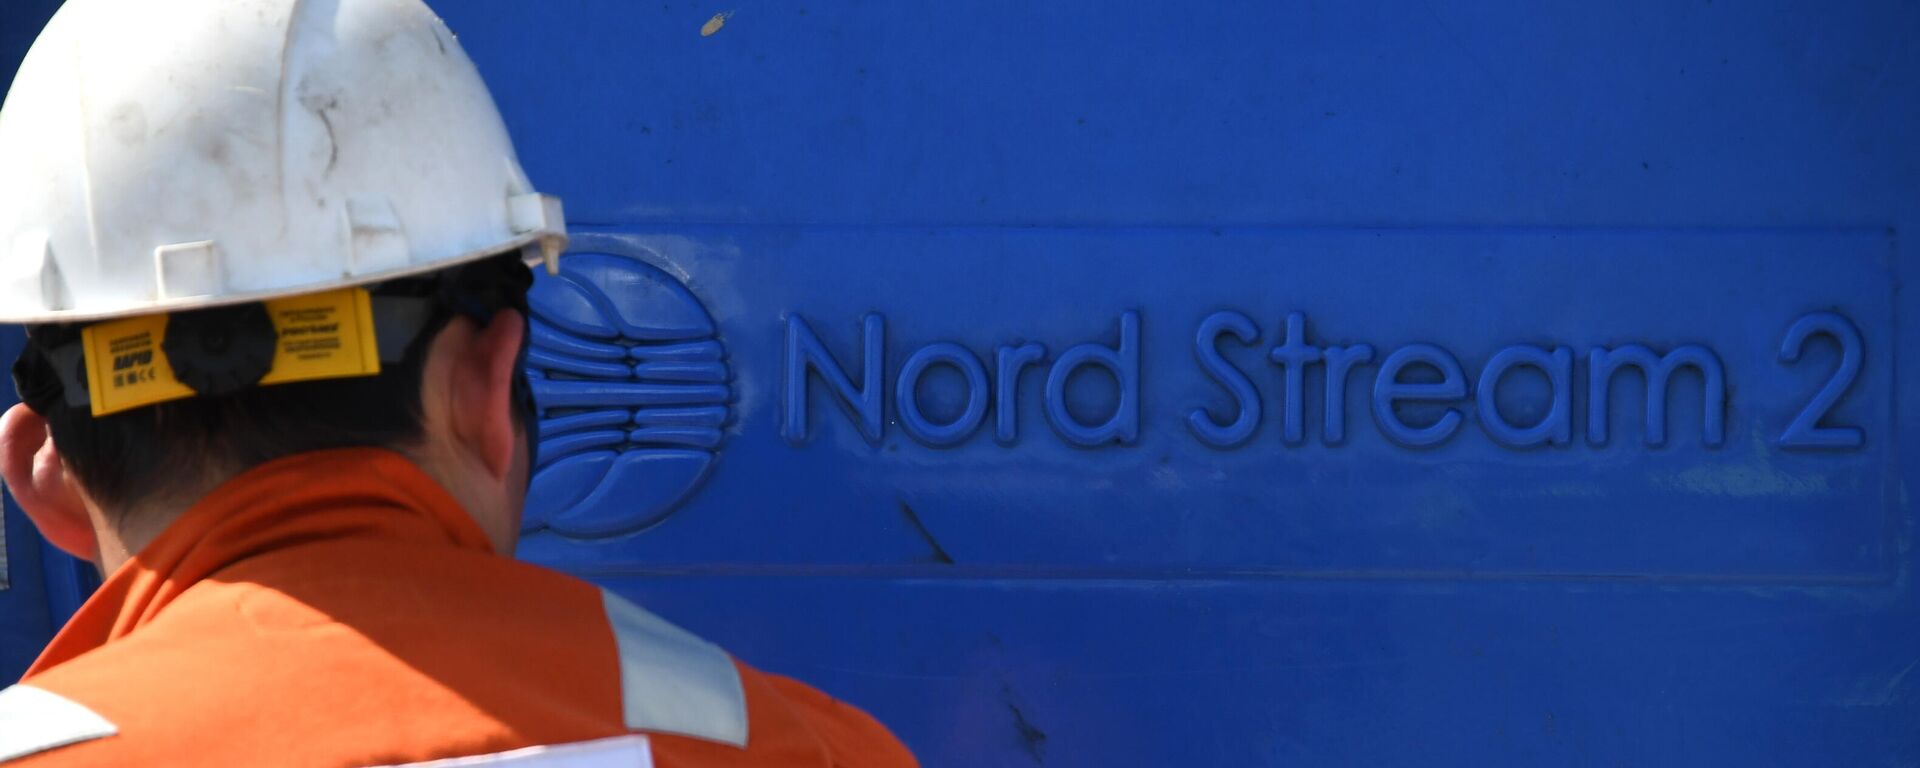 El Nord Stream 2 - Sputnik Mundo, 1920, 28.03.2023